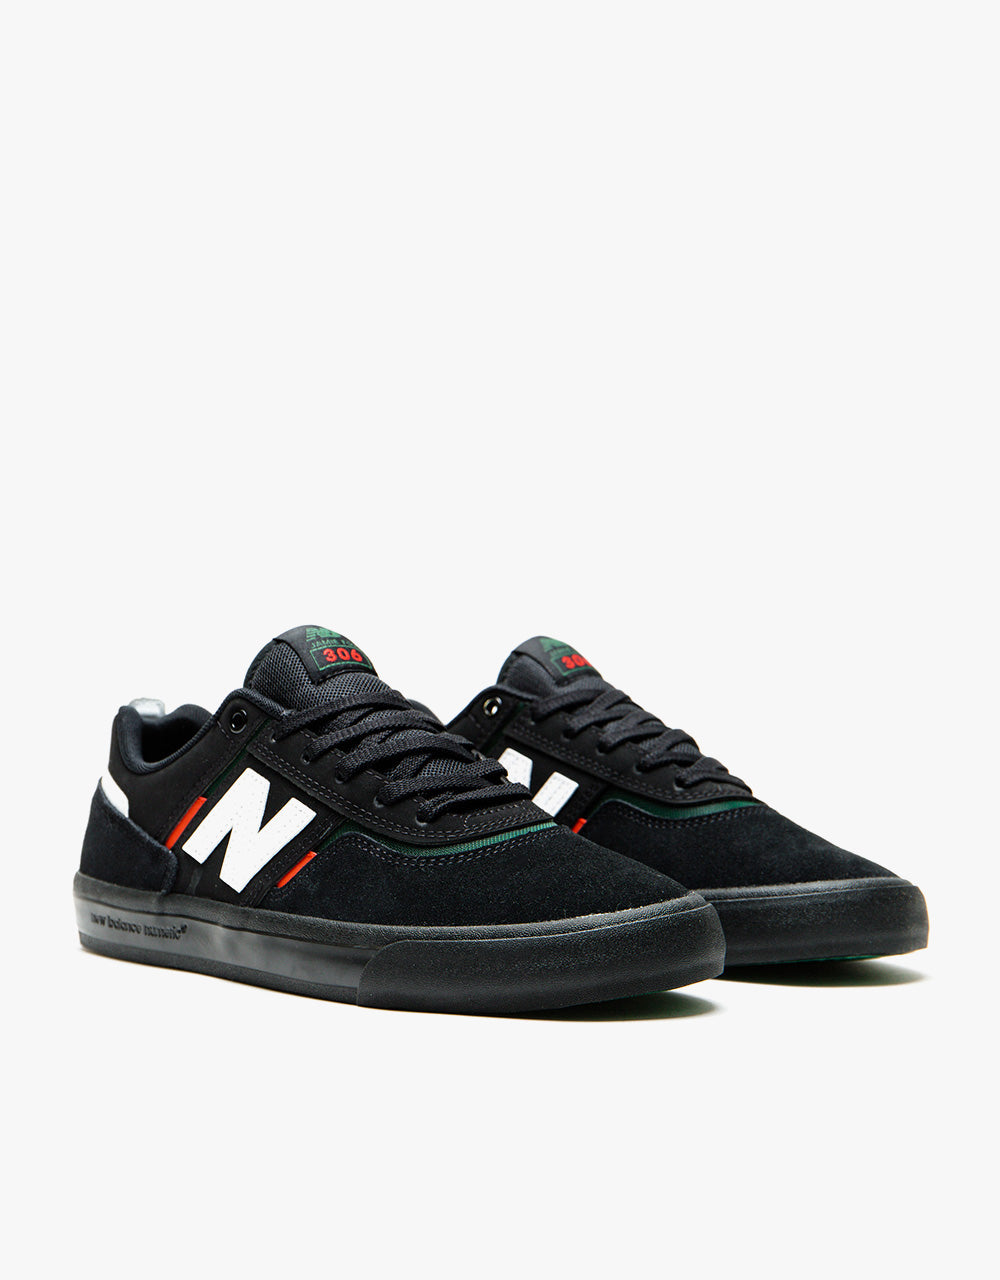 New Balance Numeric 306 Skate Shoes - Black/Black